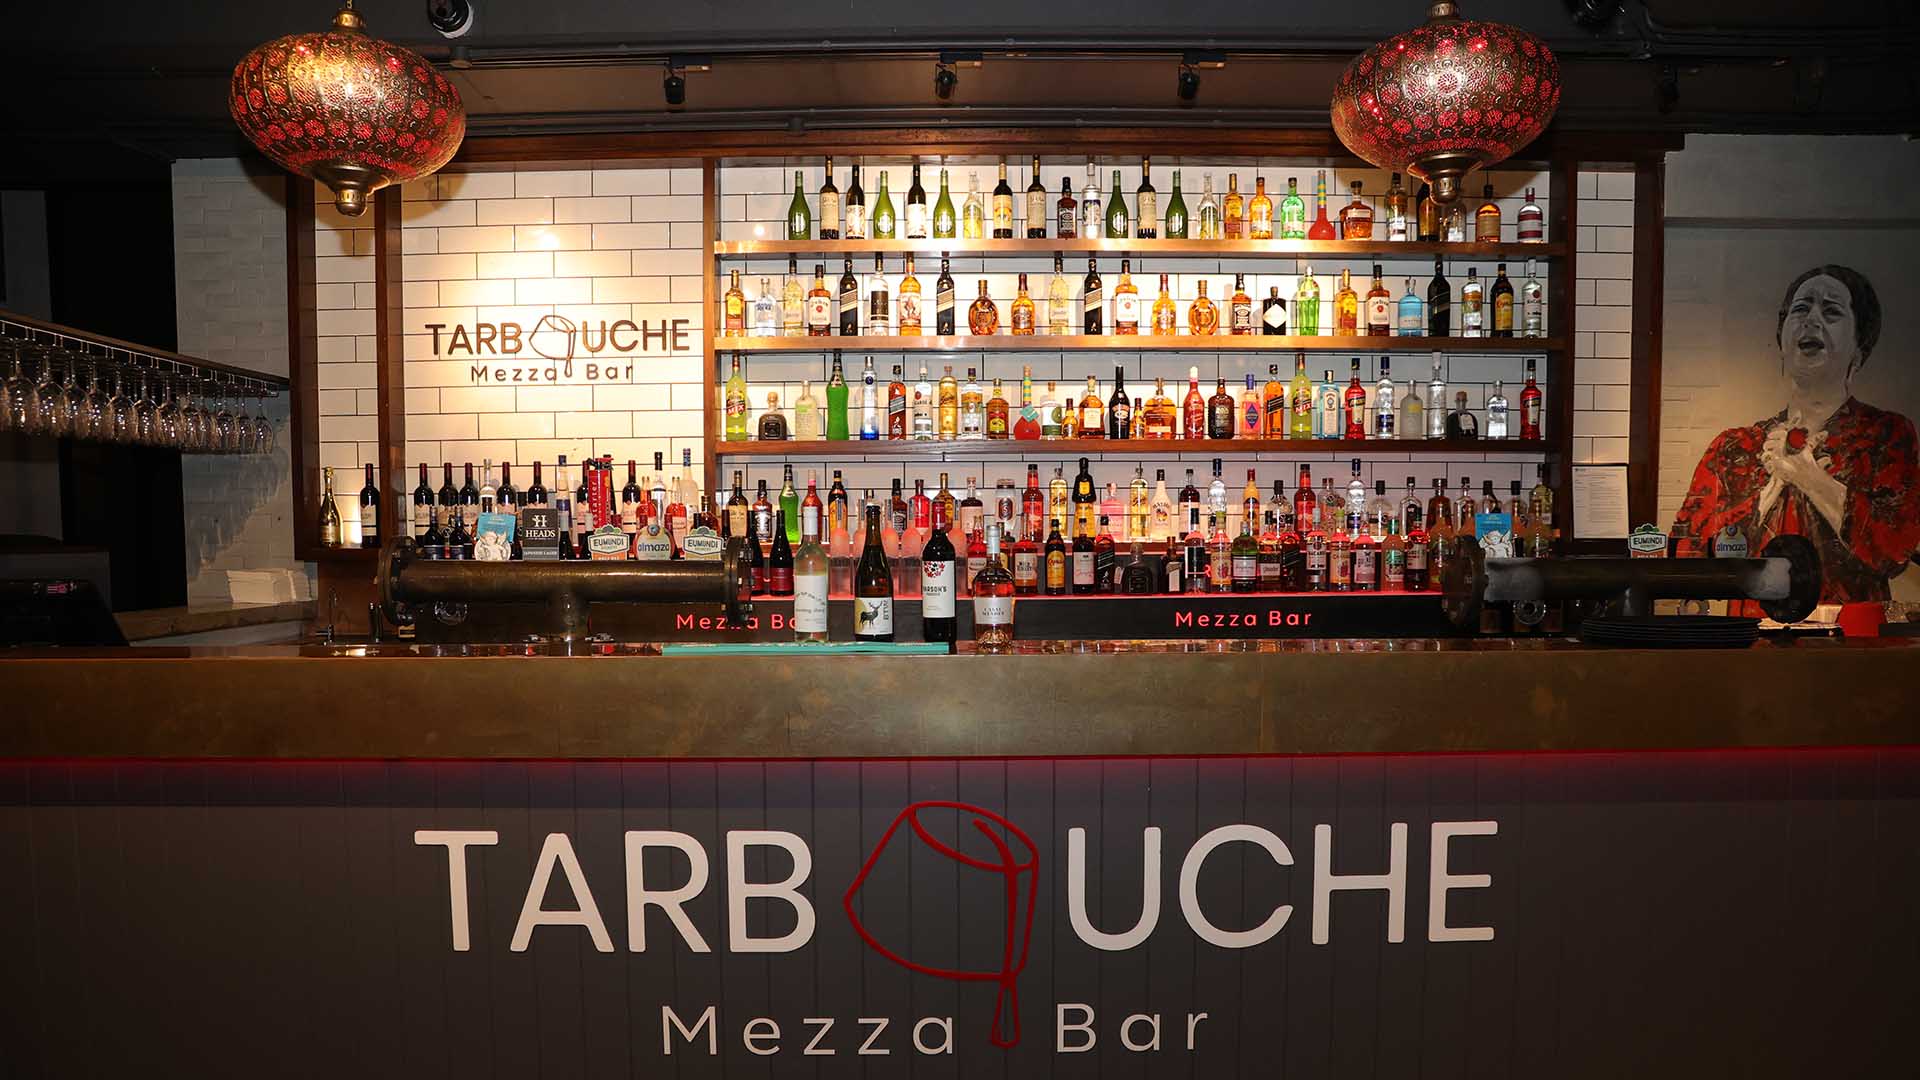 Tarbouche Mezza Bar